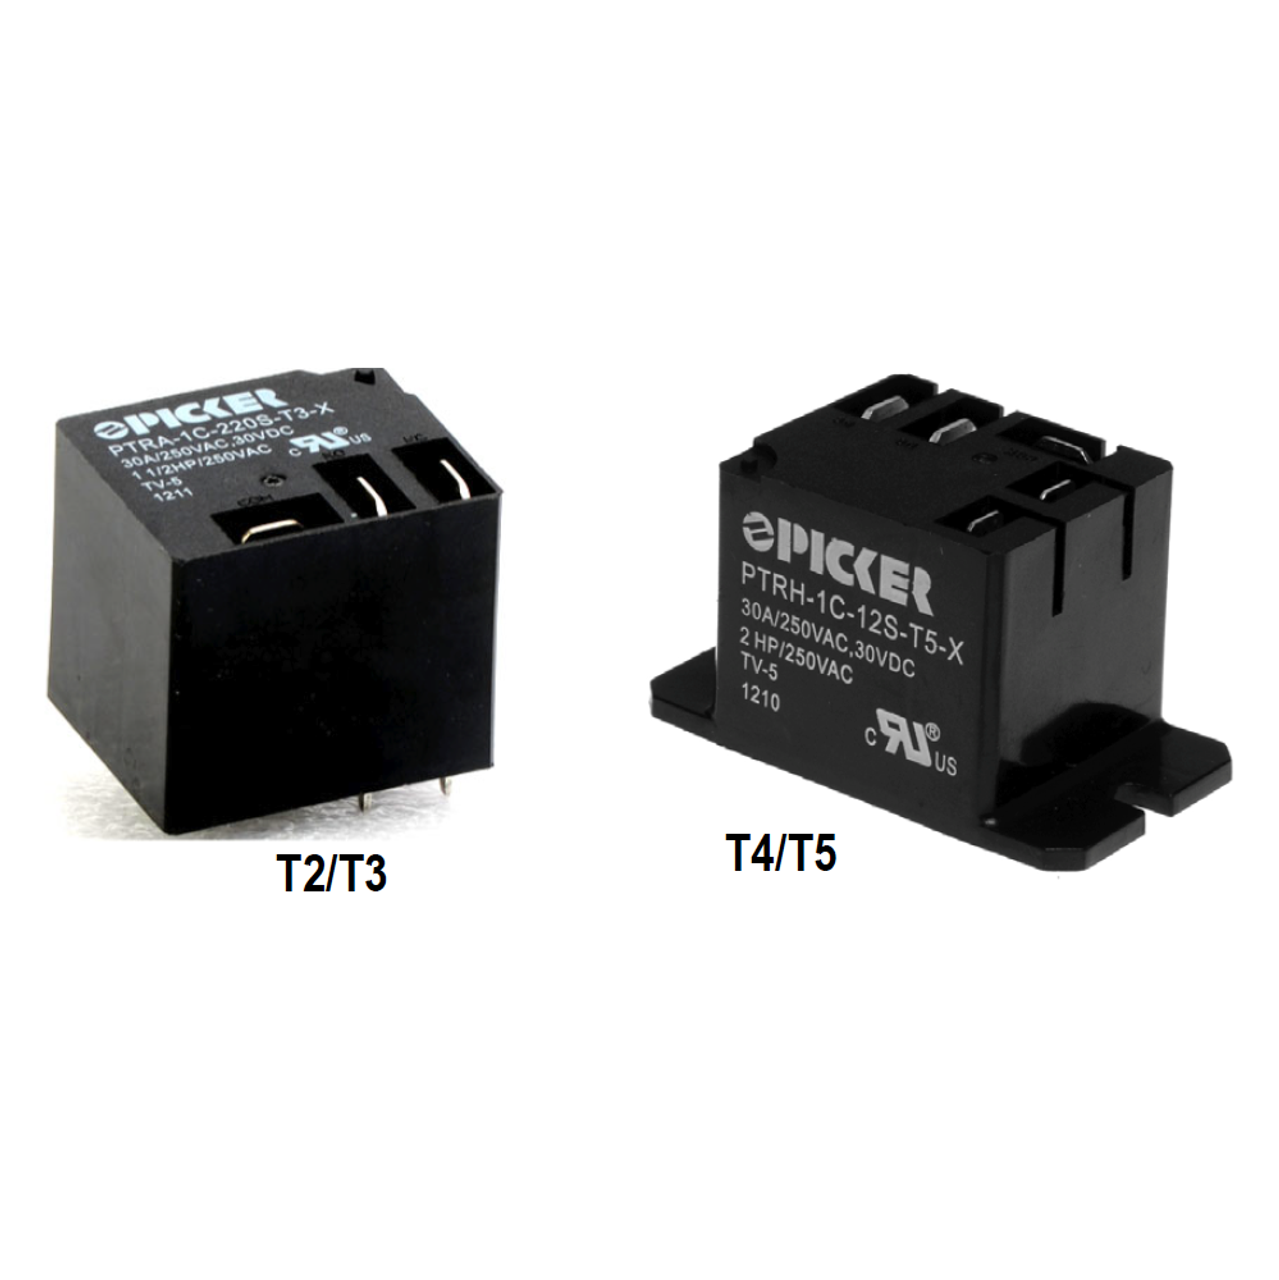 Picker PTRH-1C-110S-T4-X670.6 Power Relays